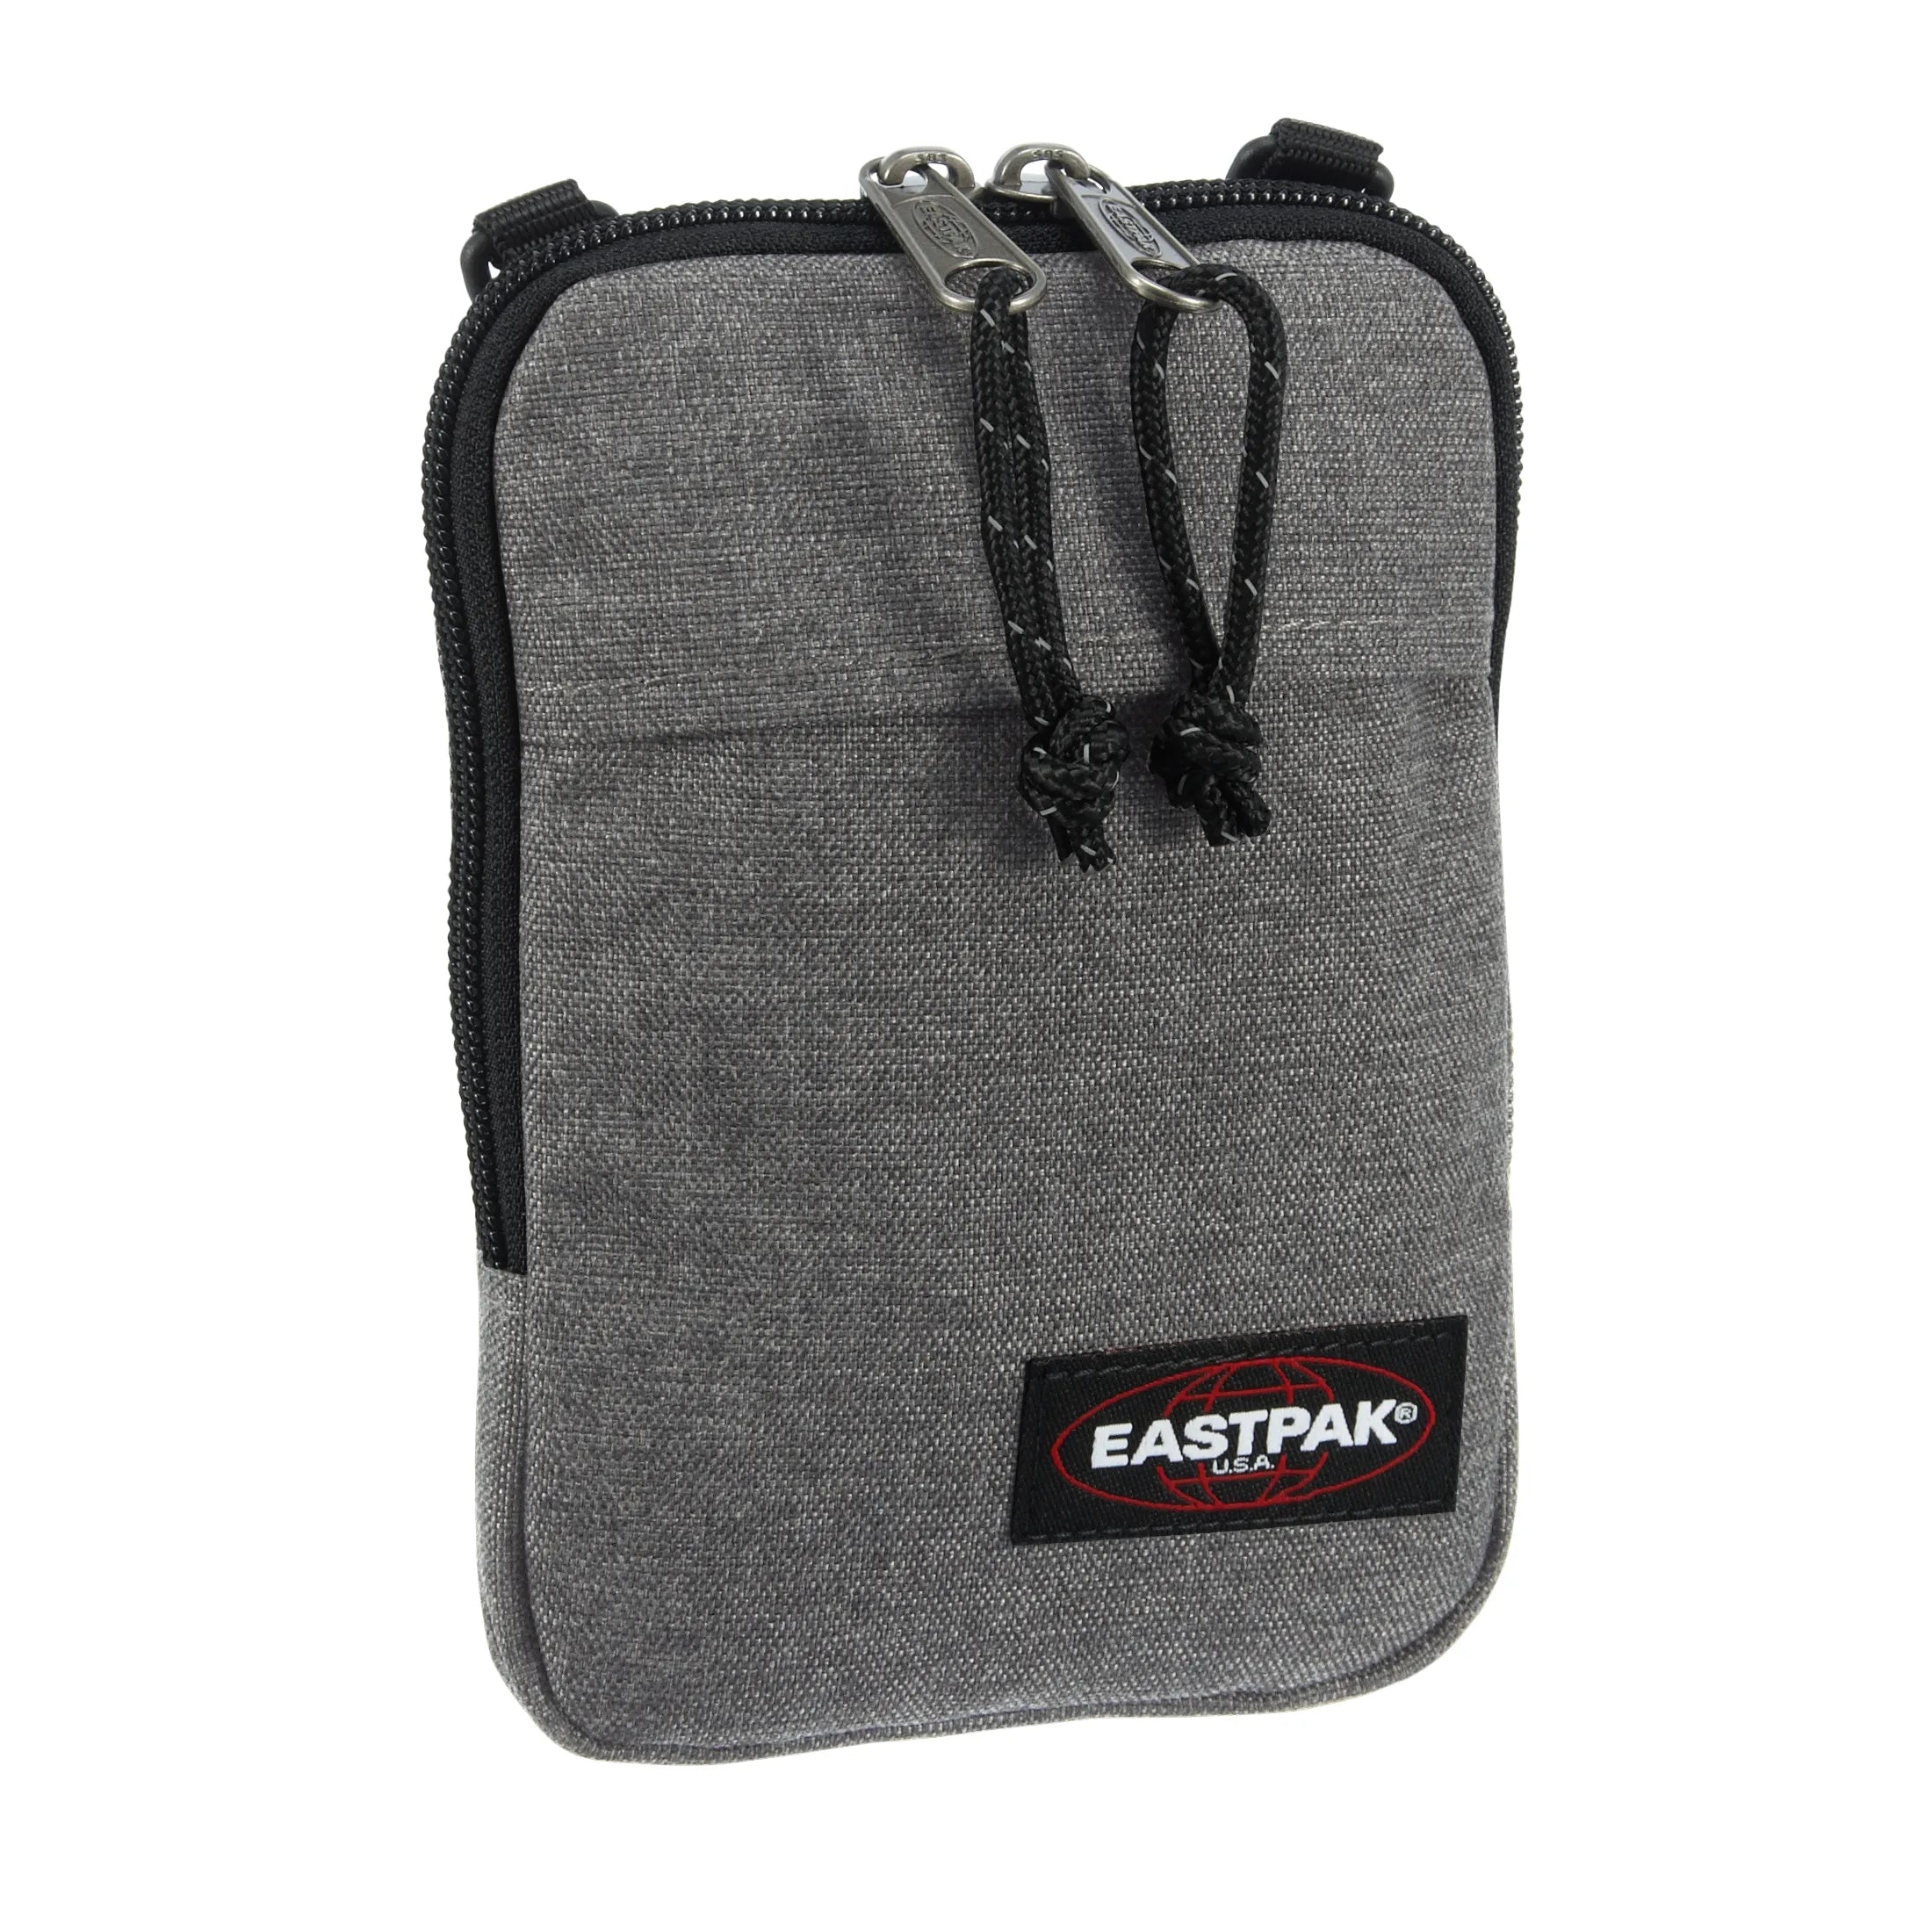 Eastpak Authentic Buddy Jugendtasche 18 cm - sunday grey